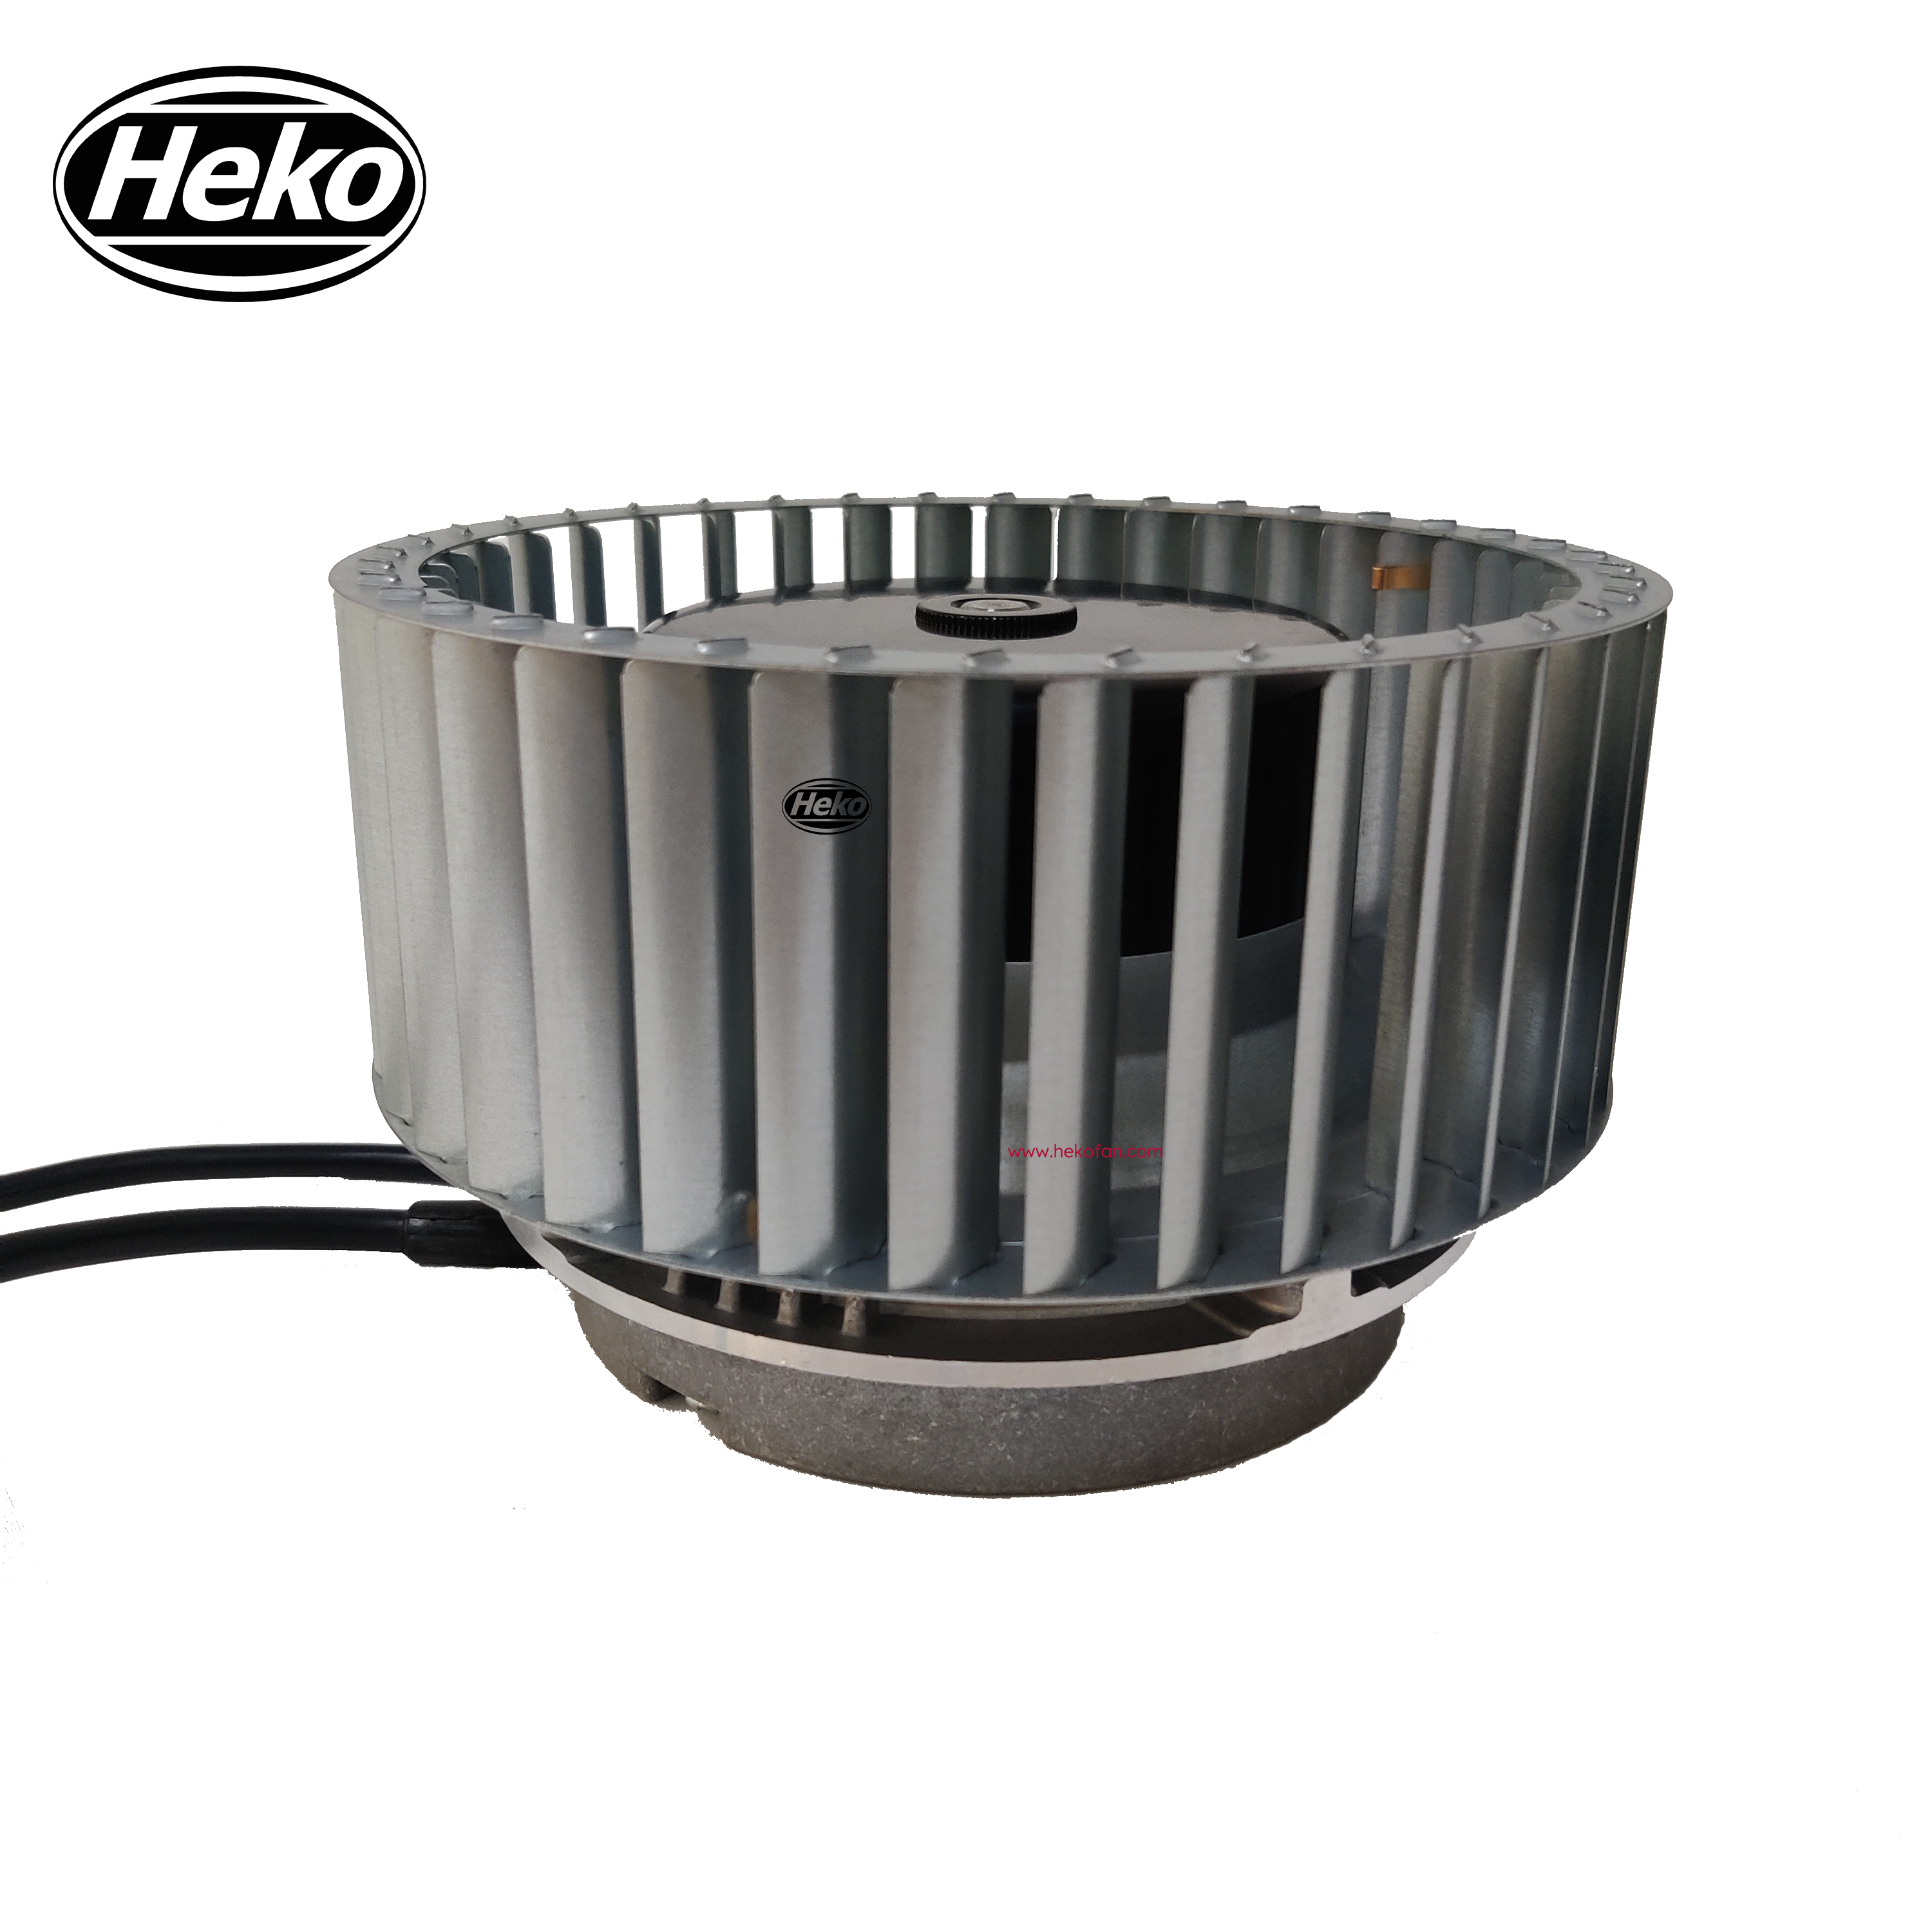 HEKO EC160mm 230V 산업용 전방 곡선형 원심 팬